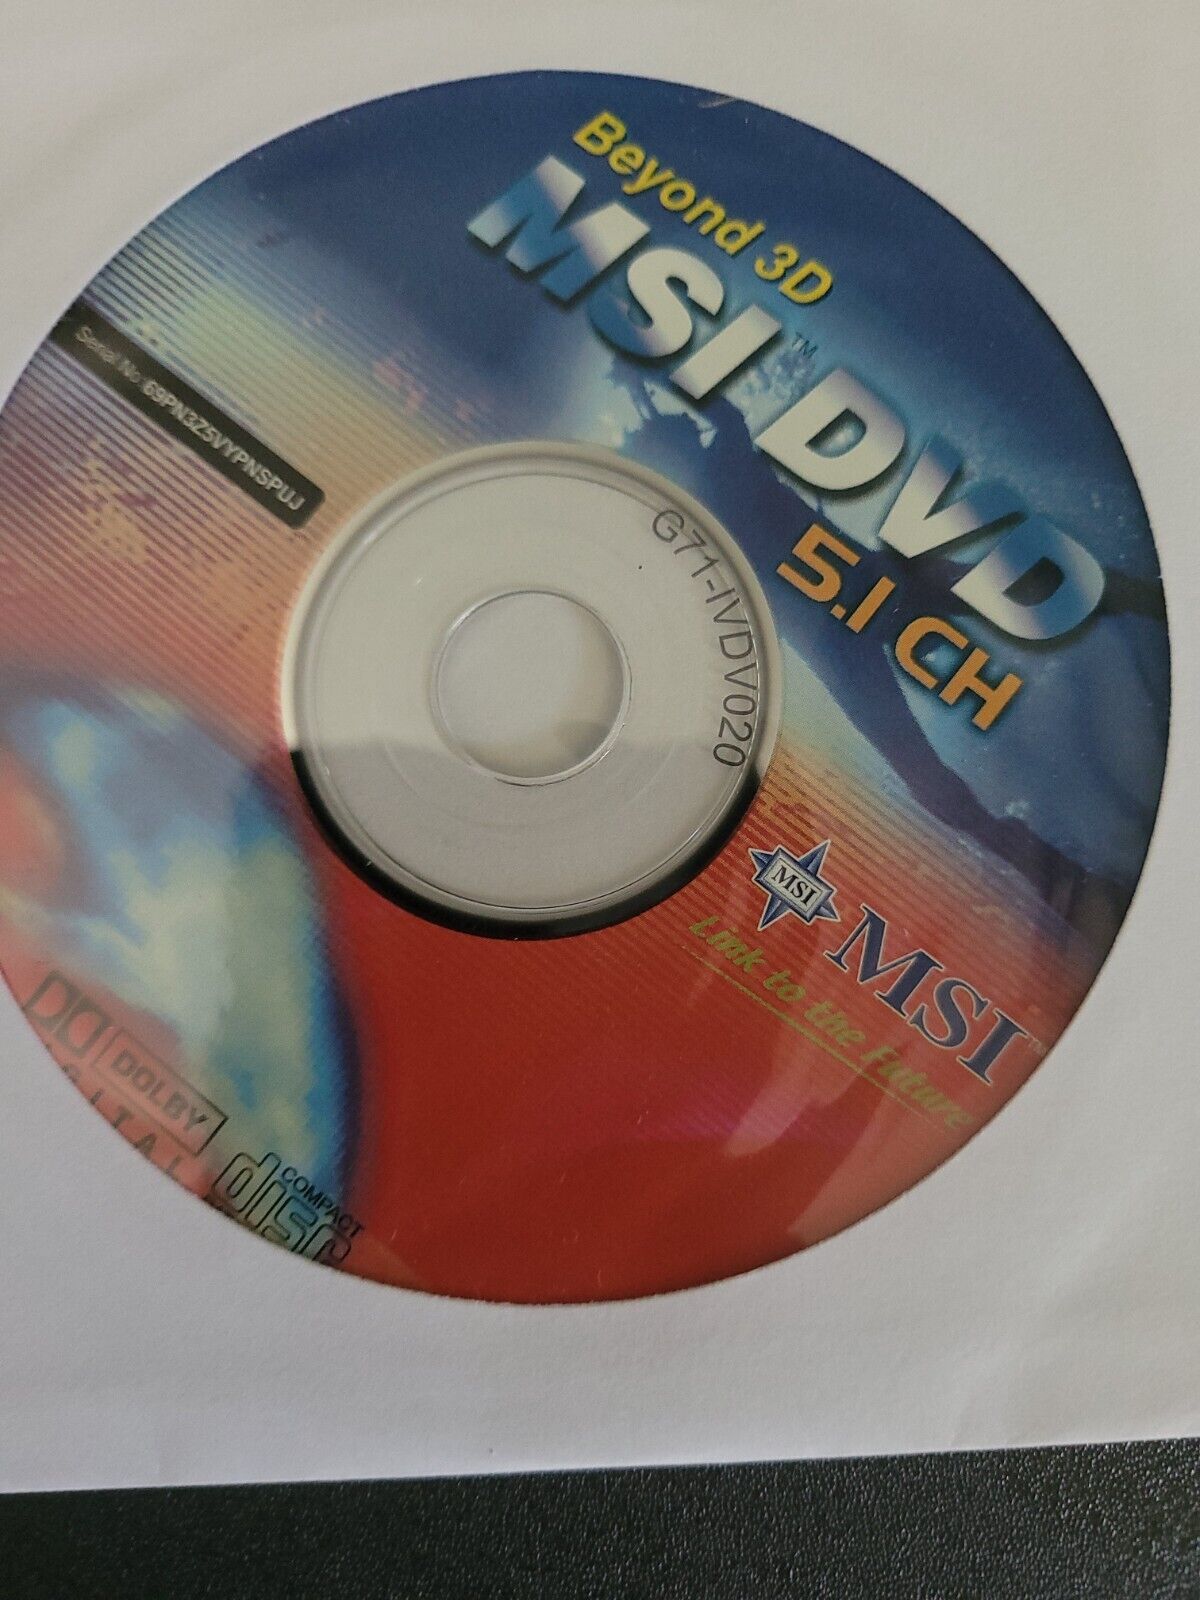 Beyond 3D MSI DVD 5.1CH - Micro-Star 5.1 CH CD